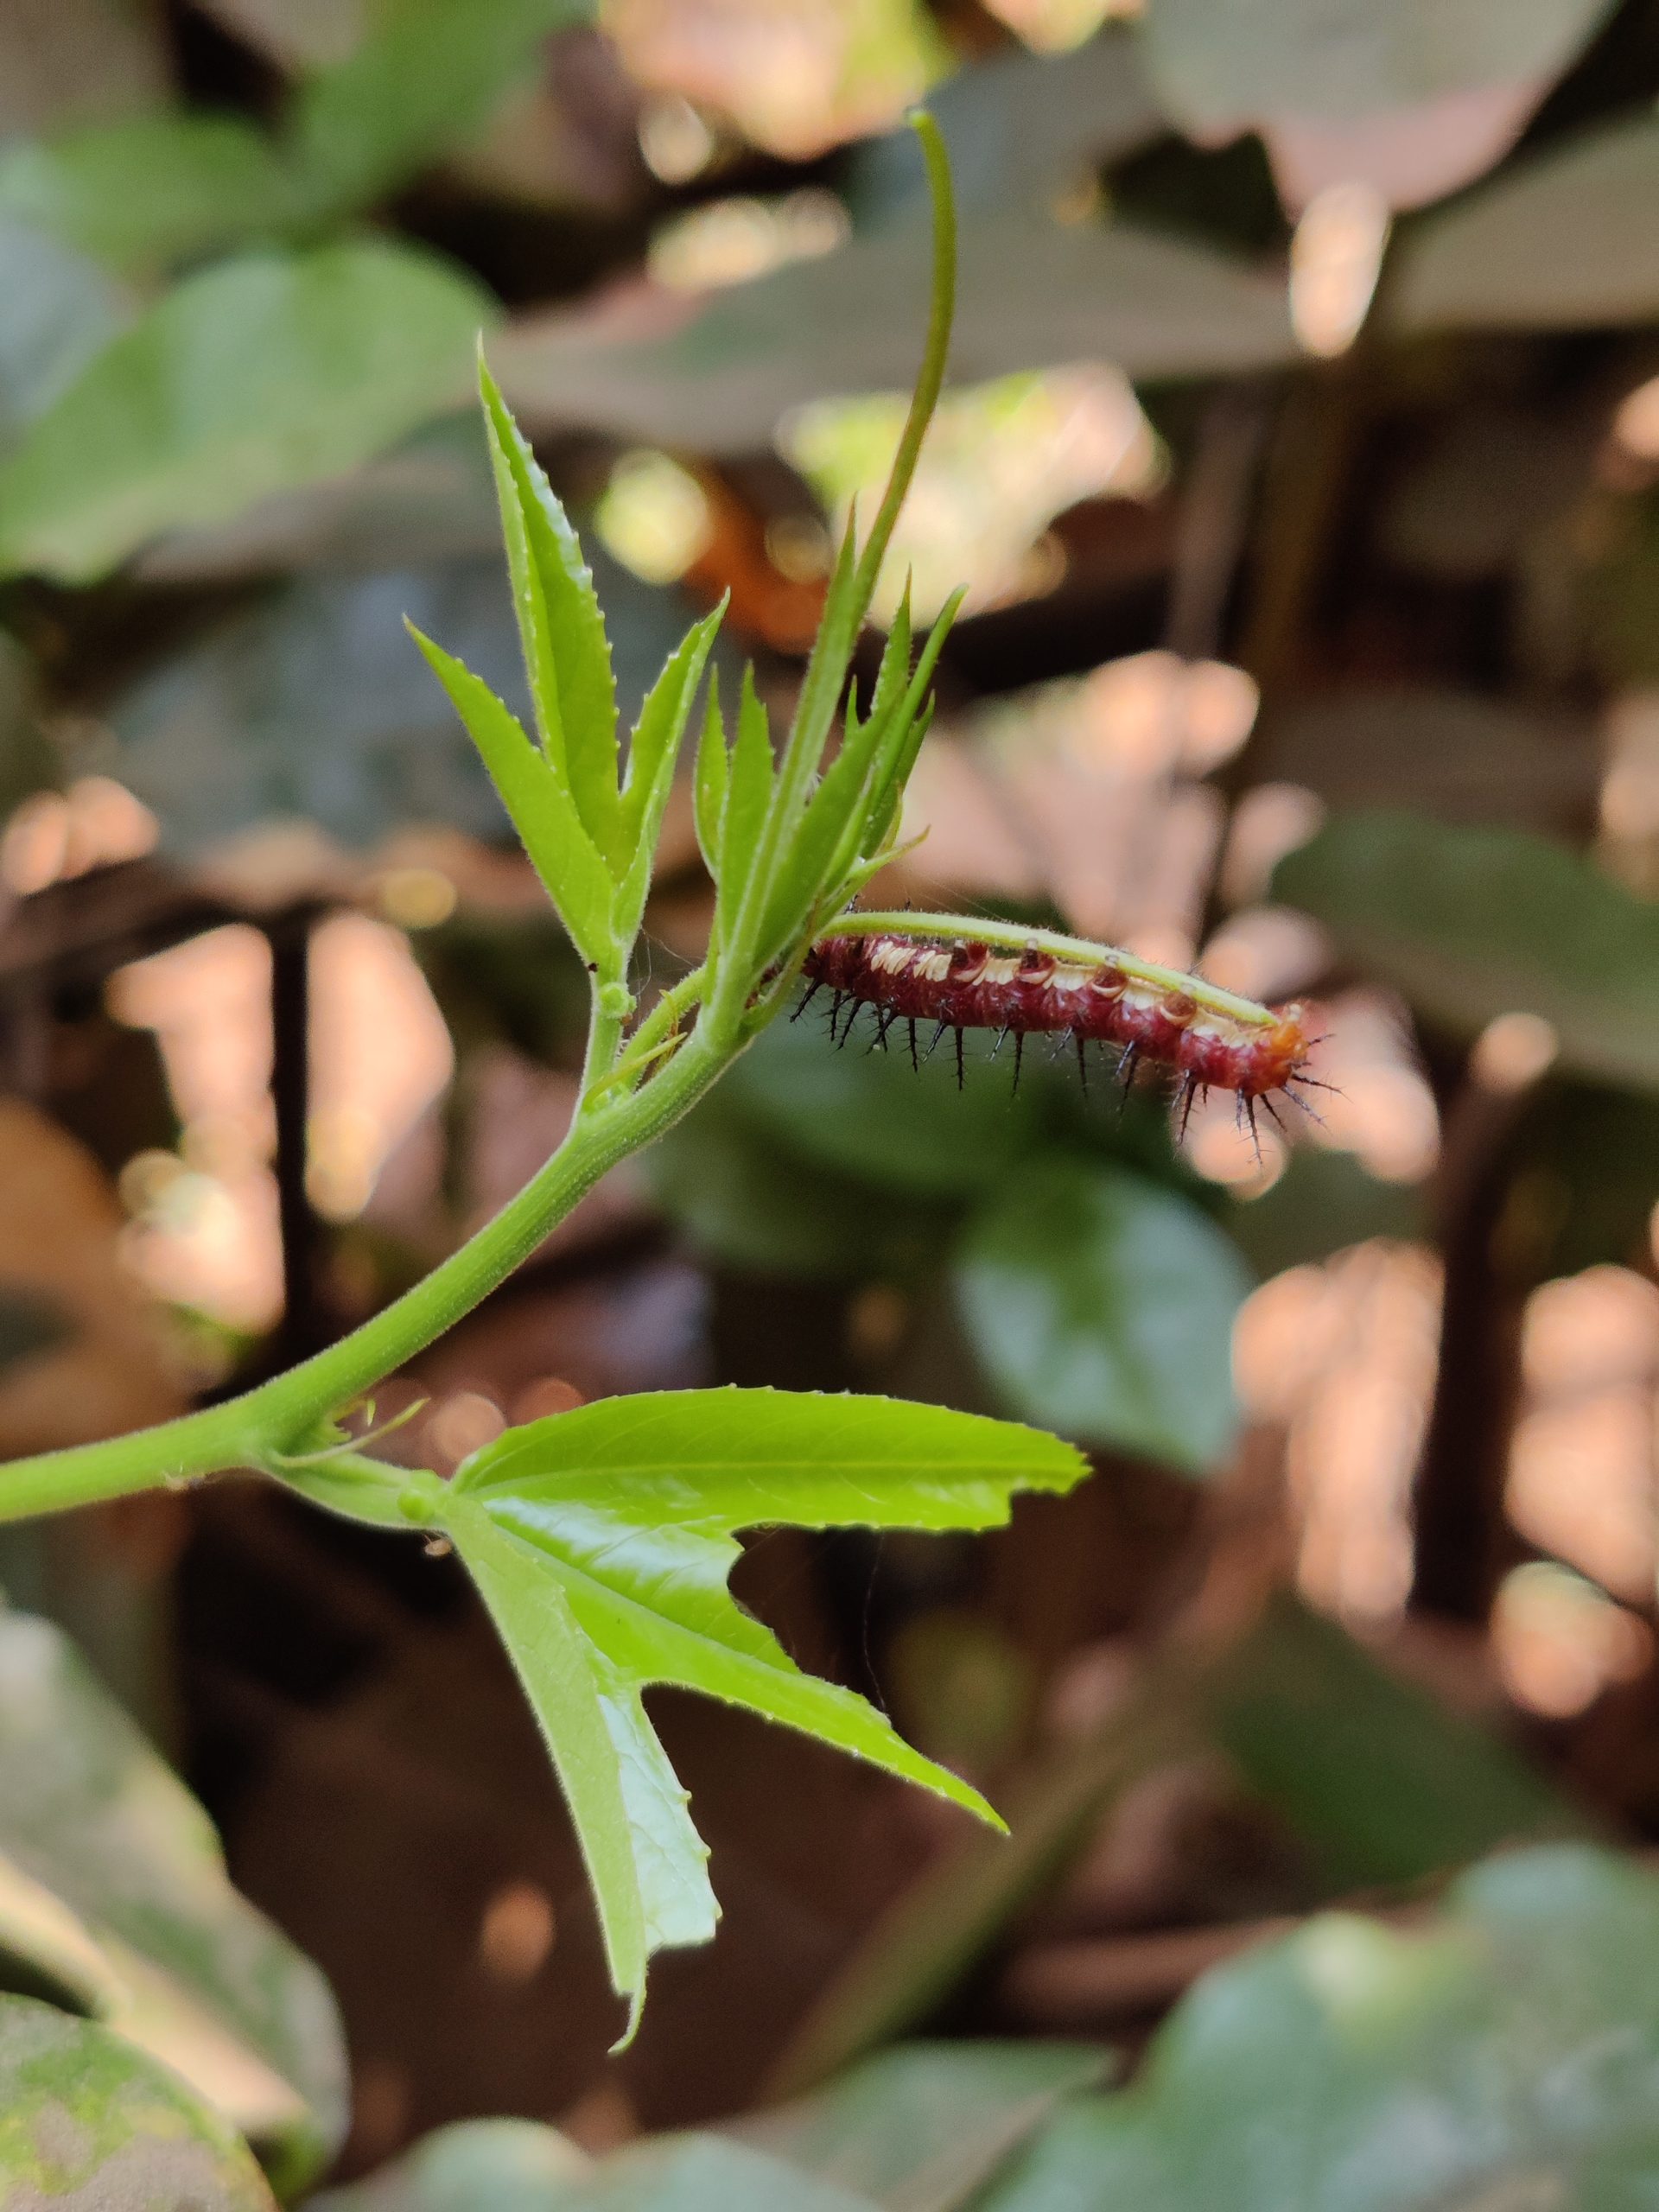 Caterpillar on leaf